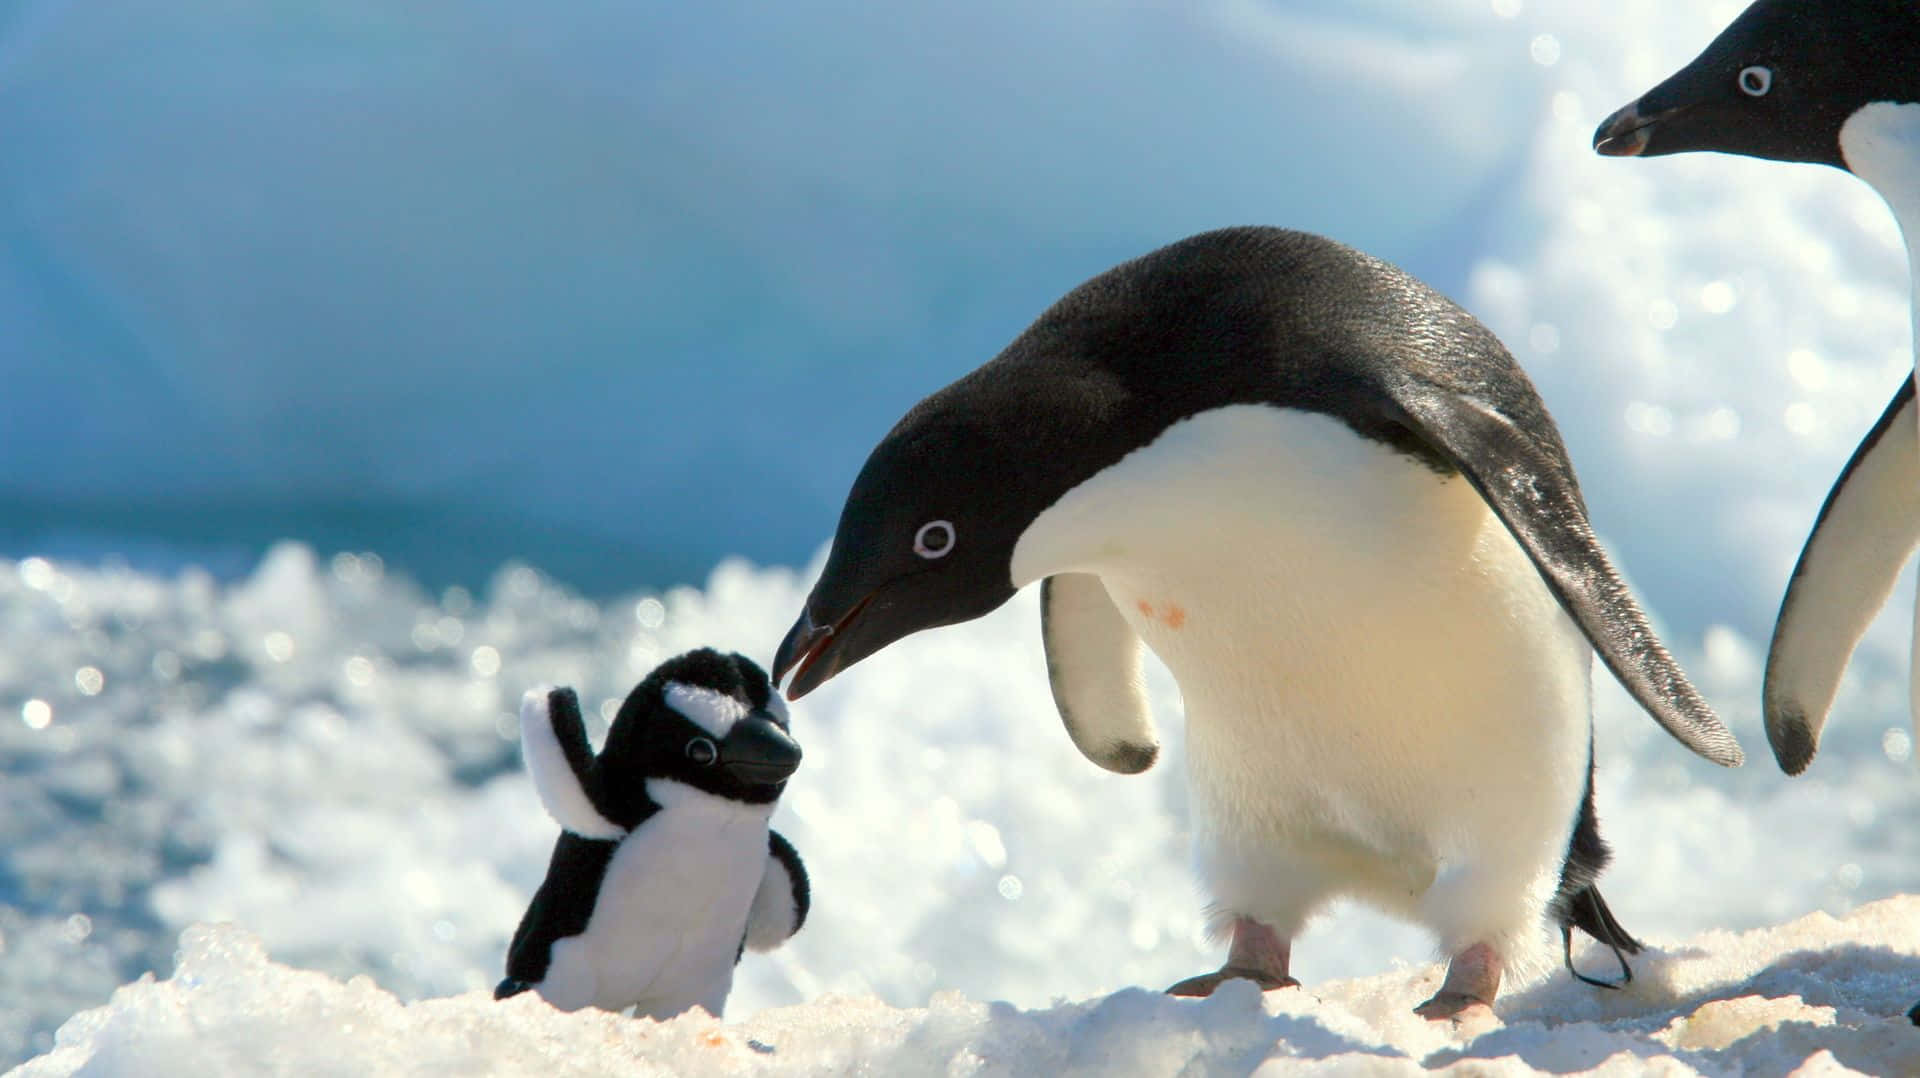 A Family of Penguins enjoying the Antarctic Landscape